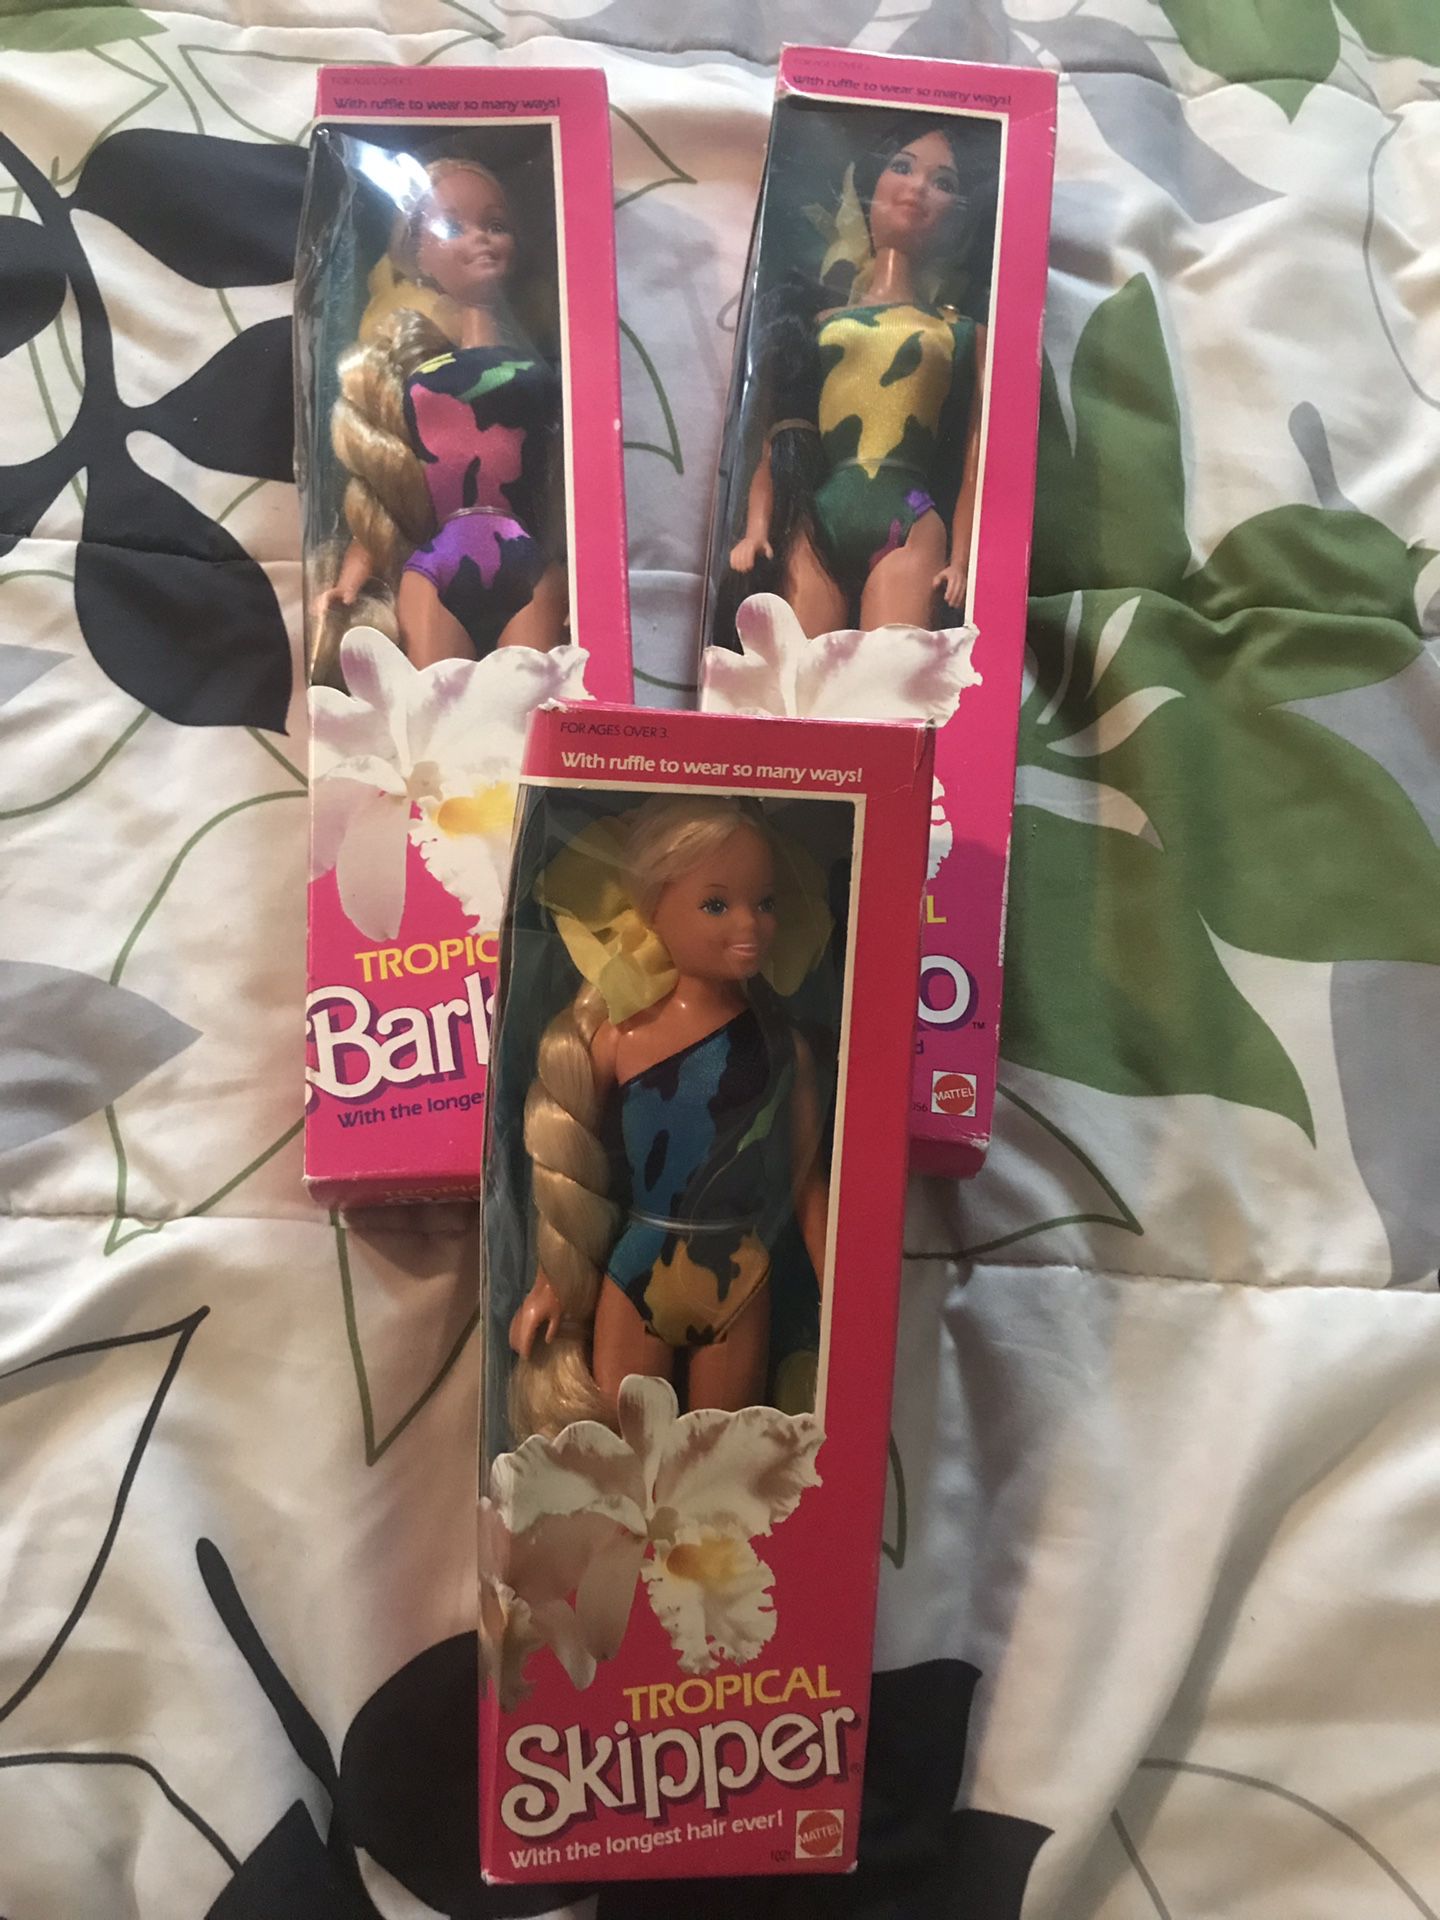 Vintage Barbie dolls from 1985